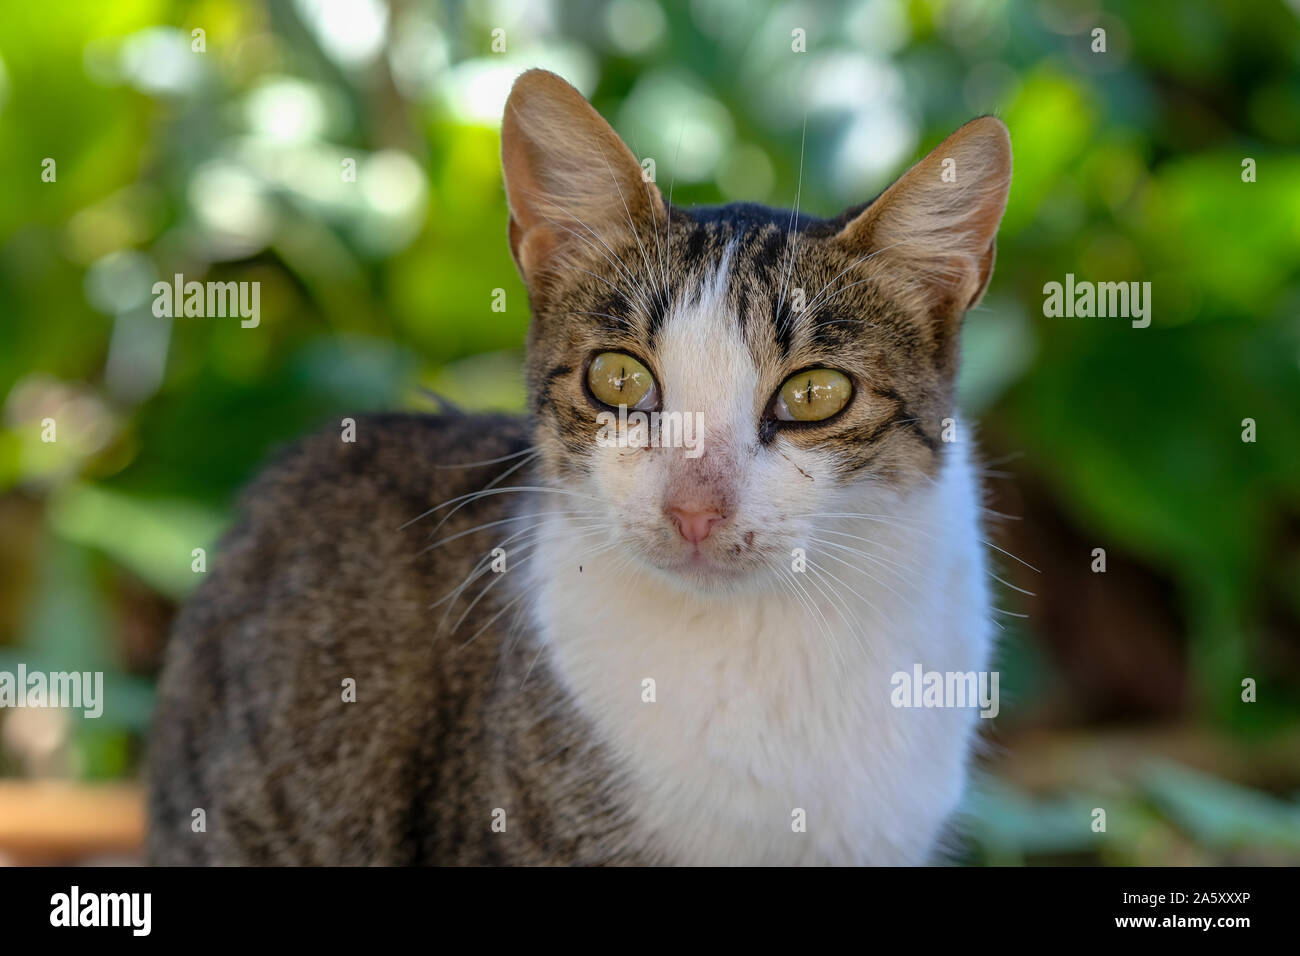 Wild cat eyes, portrait on blurred background Stock Photo